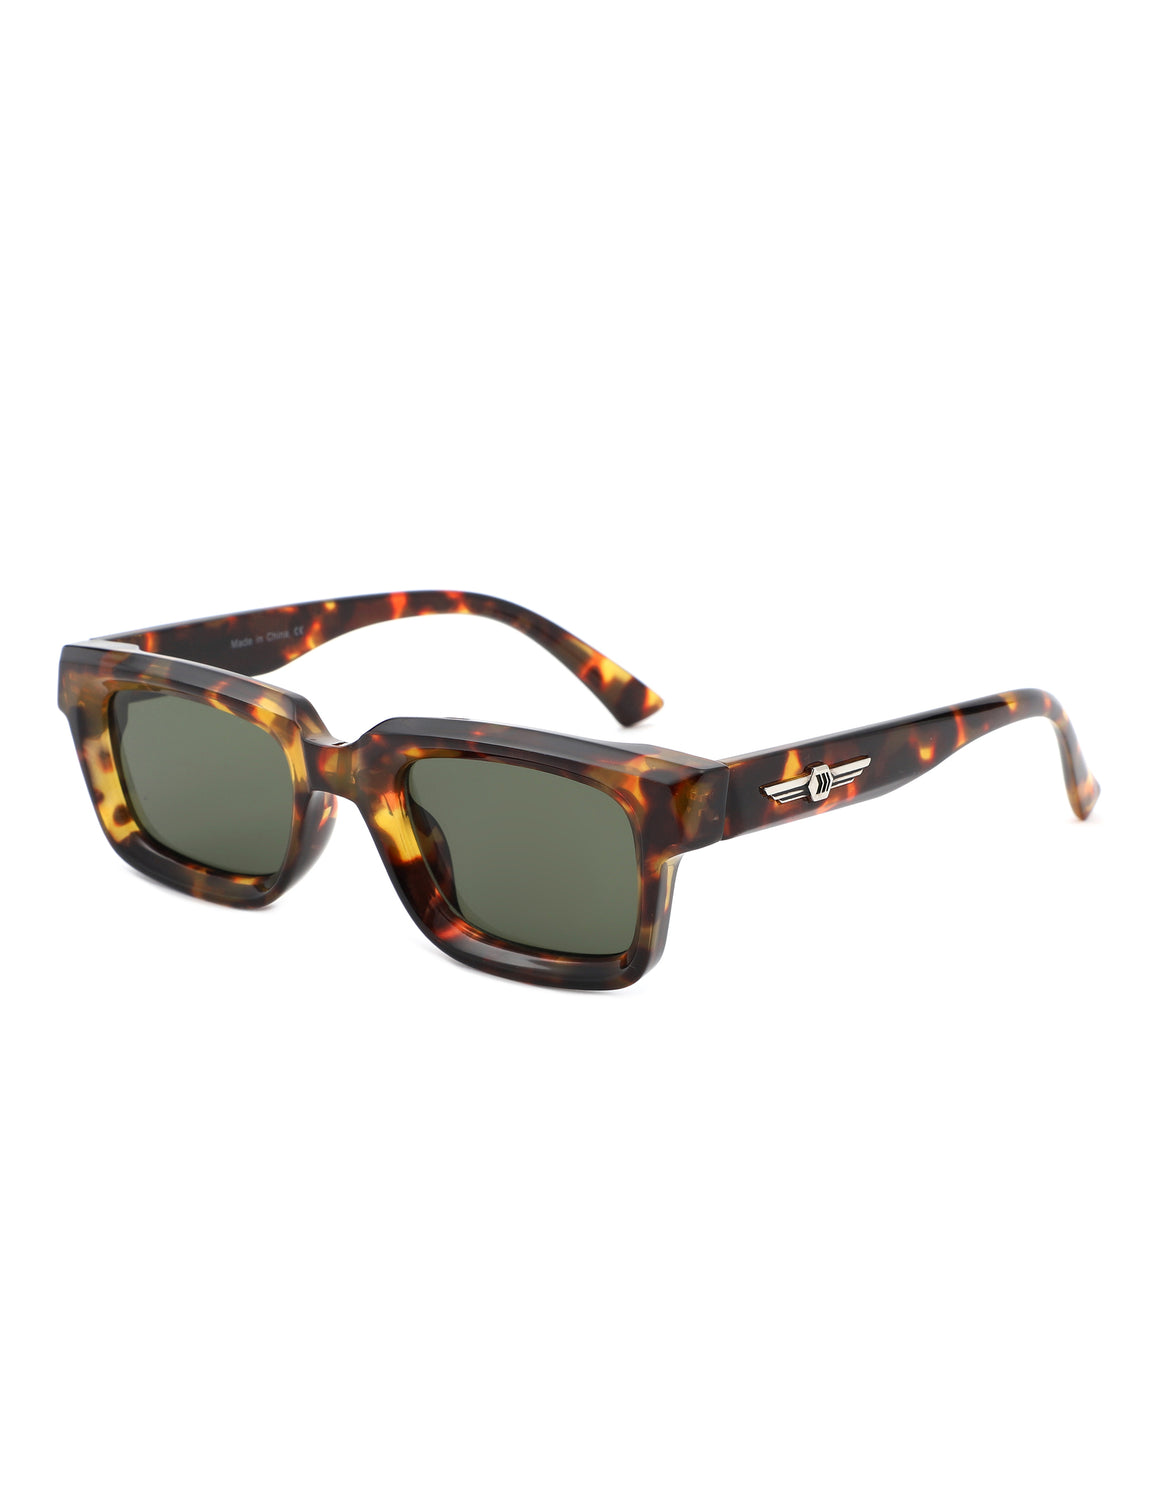 Qeclington - Cramilo  Retro Narrow Square Frame Women's Fashion Sunglasses